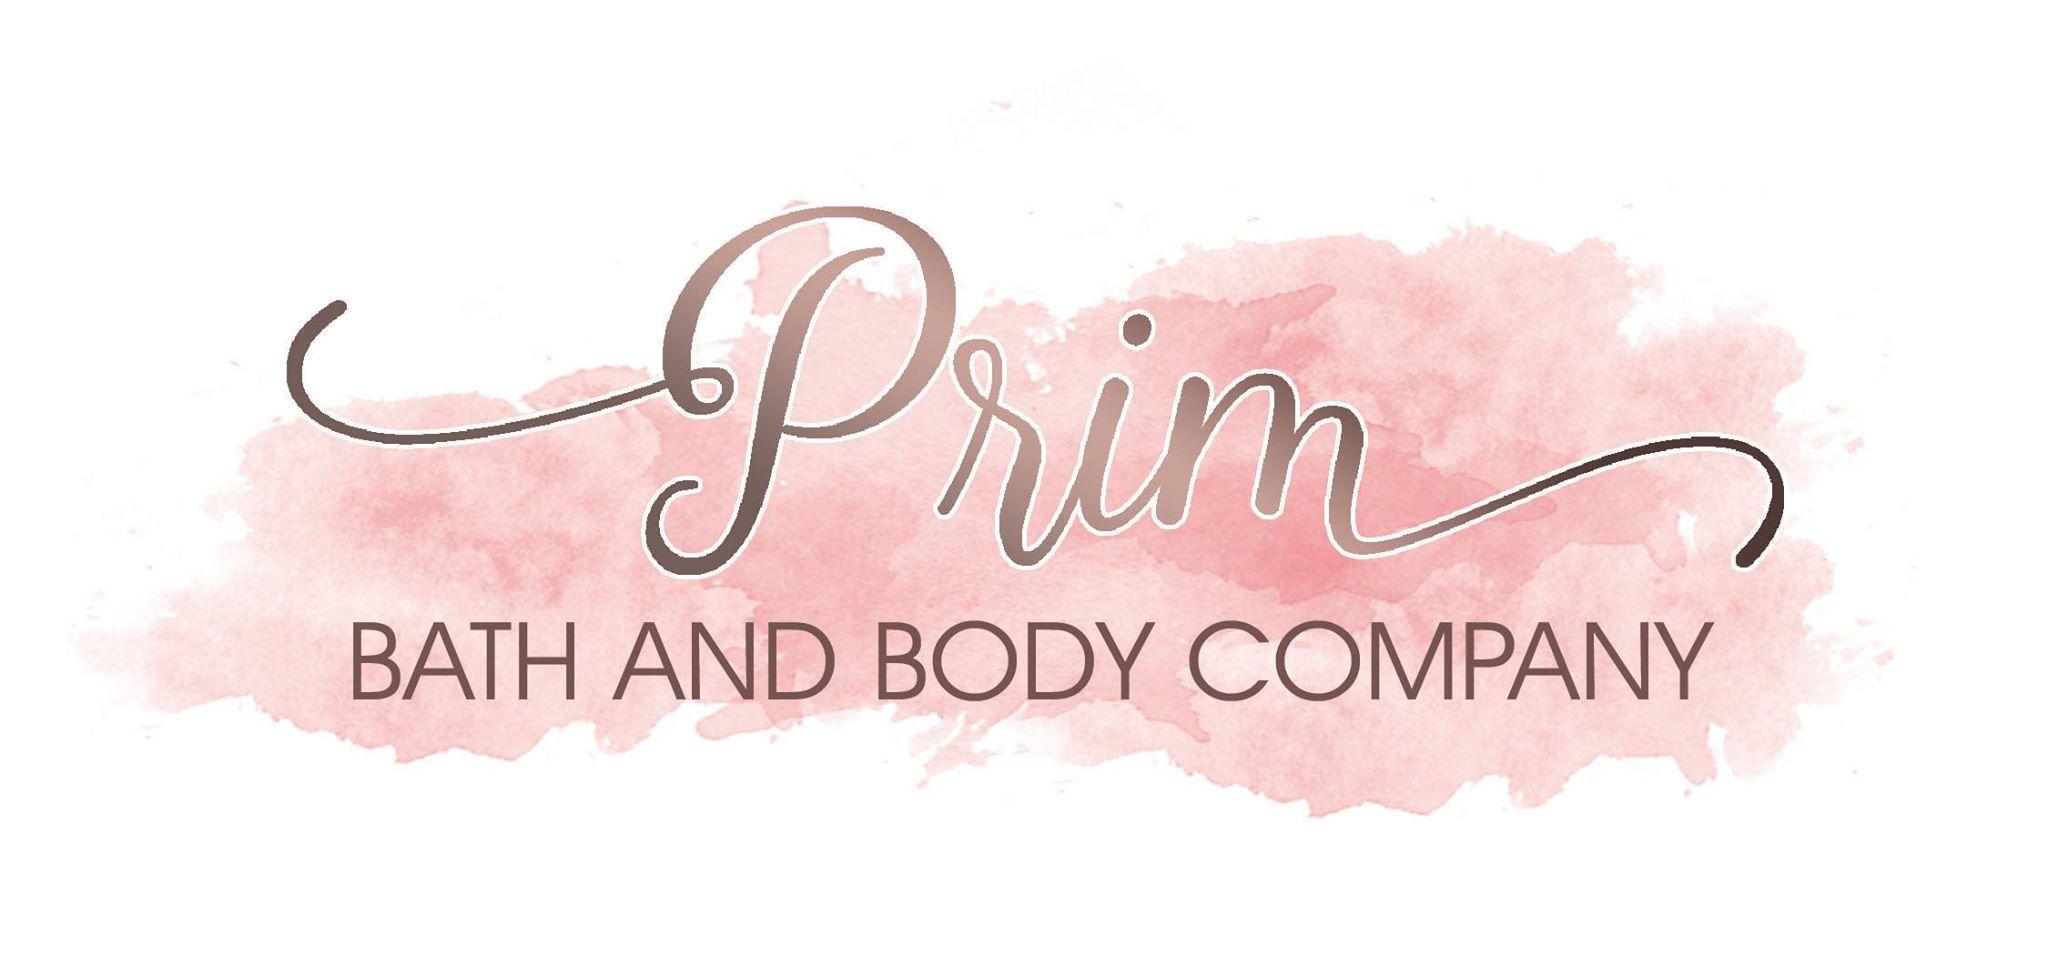 Bath and Body Company Logo - Prim Bath and Body Company | Go Lafayette